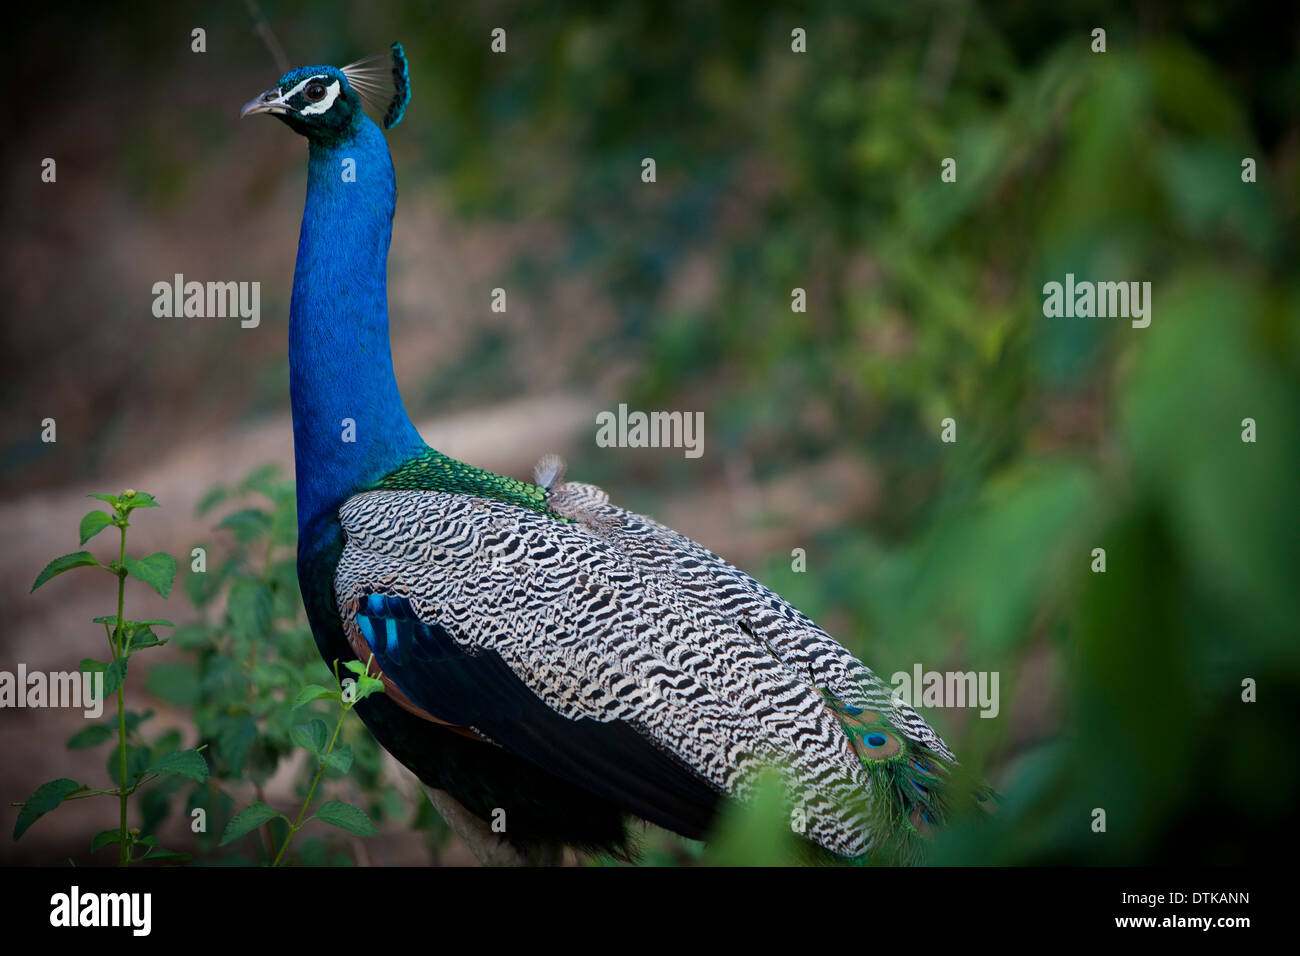 Peacock the National bird of India. Stock Photo